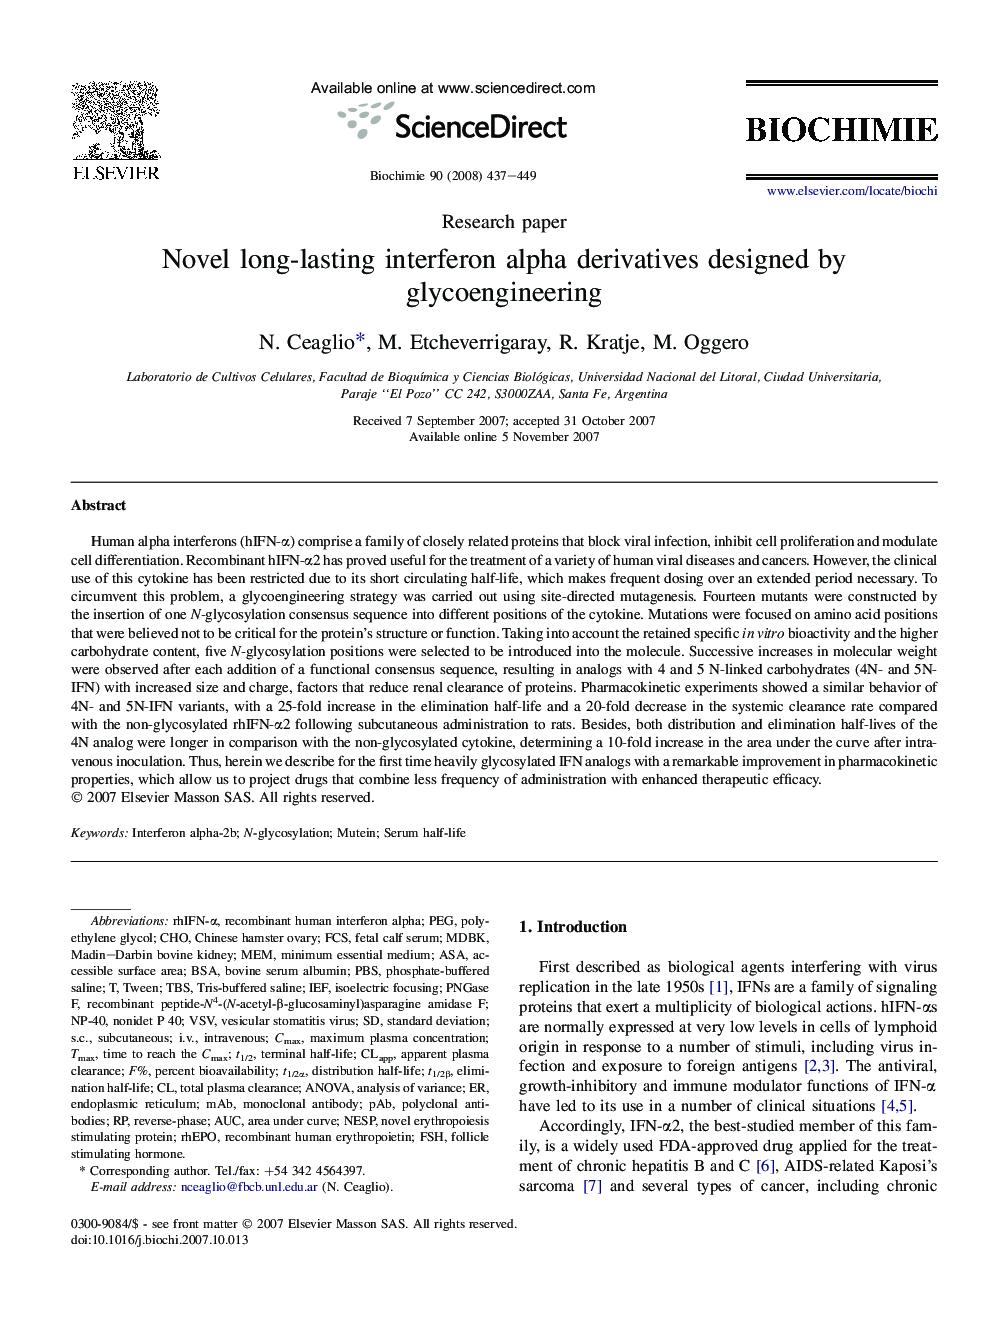 Novel long-lasting interferon alpha derivatives designed by glycoengineering